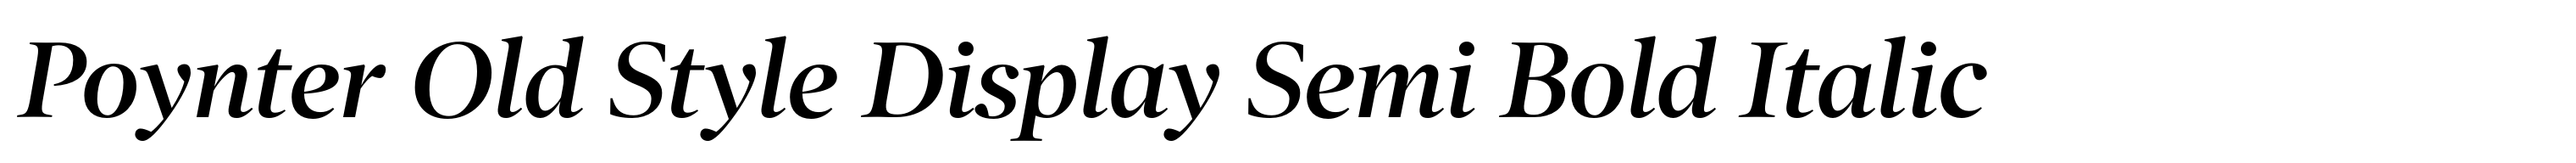 Poynter Old Style Display Semi Bold Italic